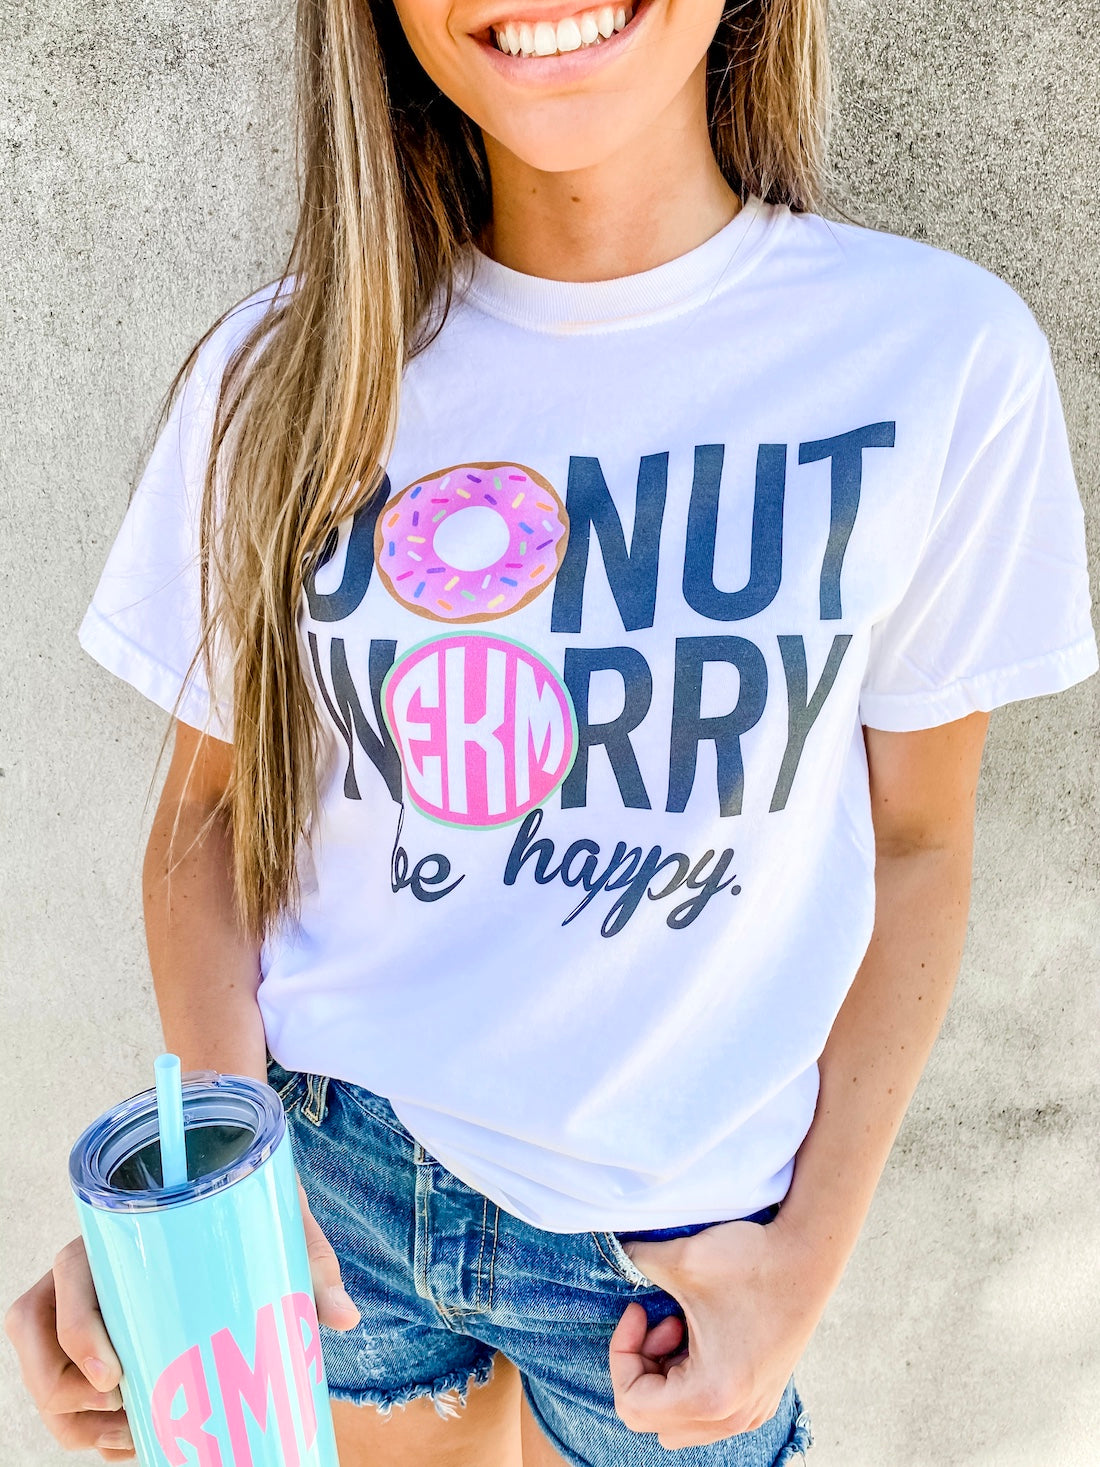 Graphic Donut Worry shirt cozy cute